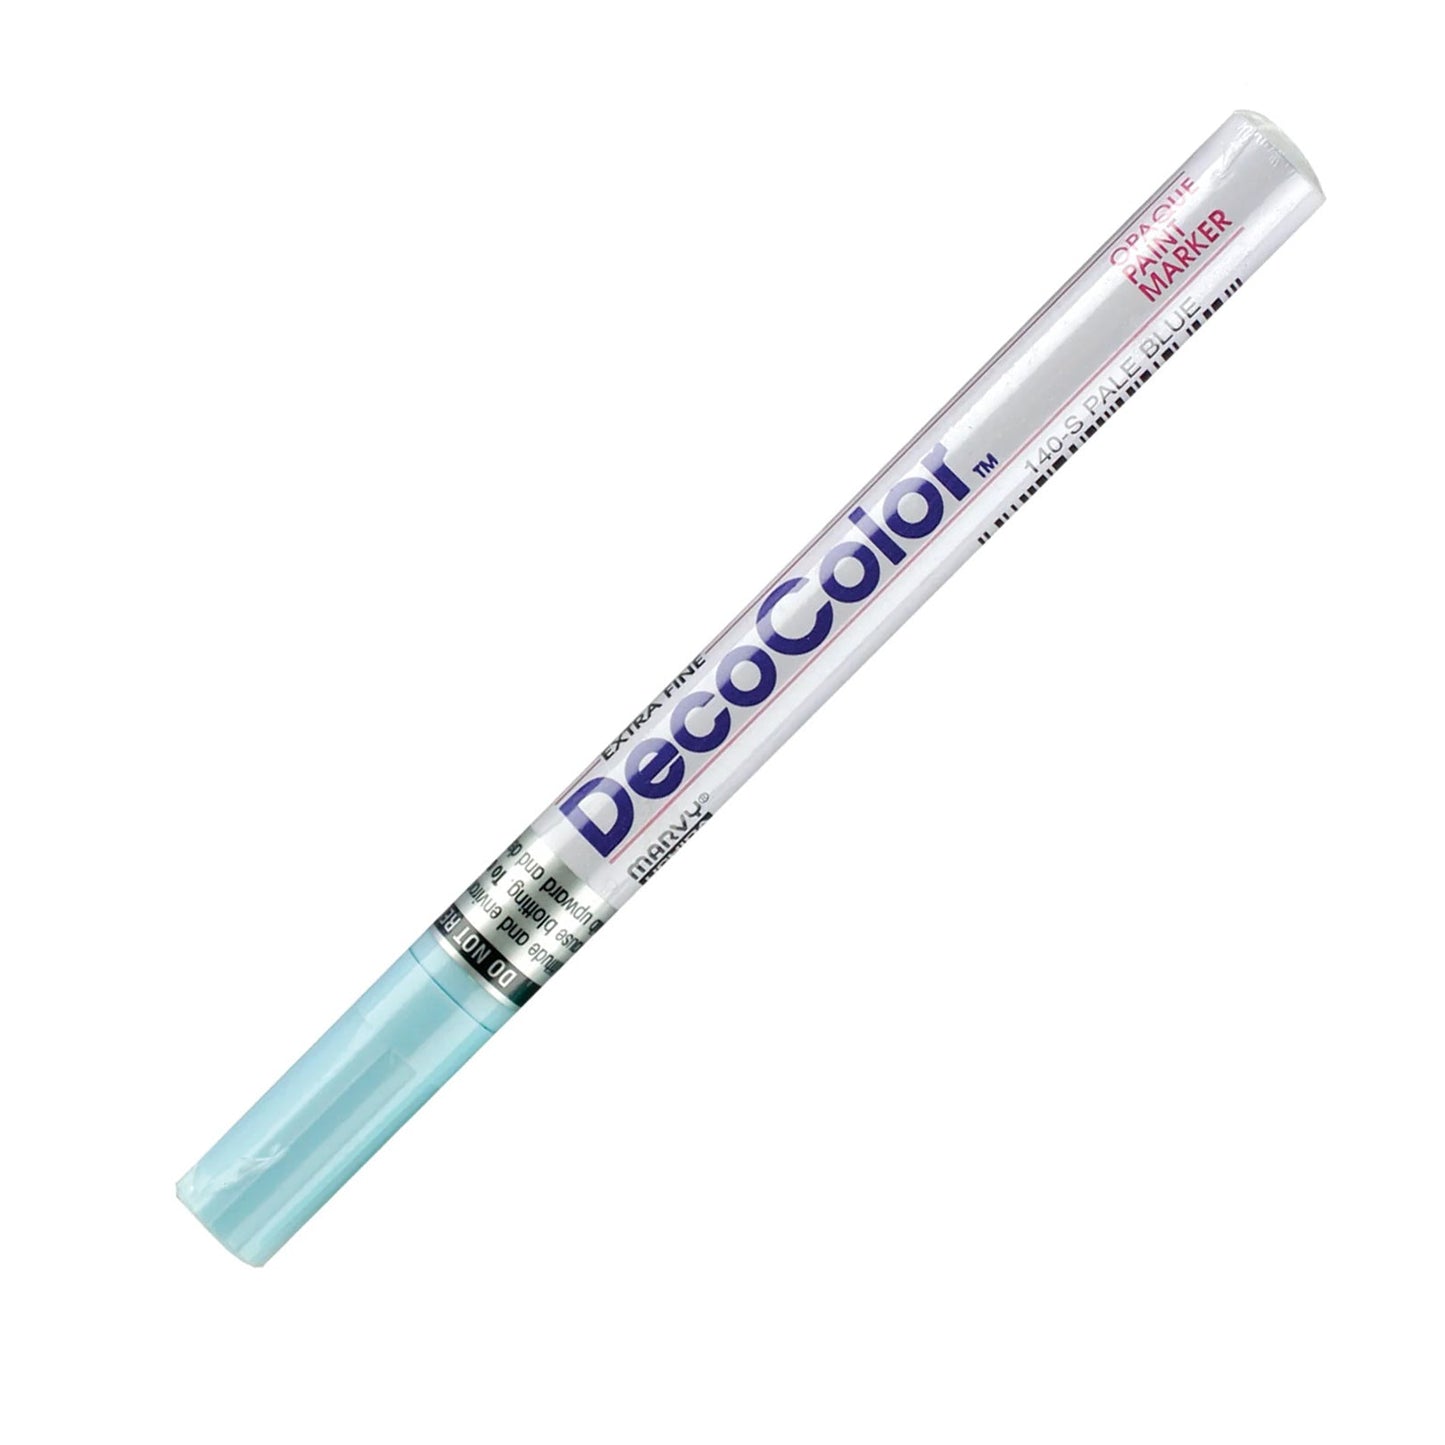 Decocolor verfmarker, 0,8 mm extra fijne Specialtech-punt